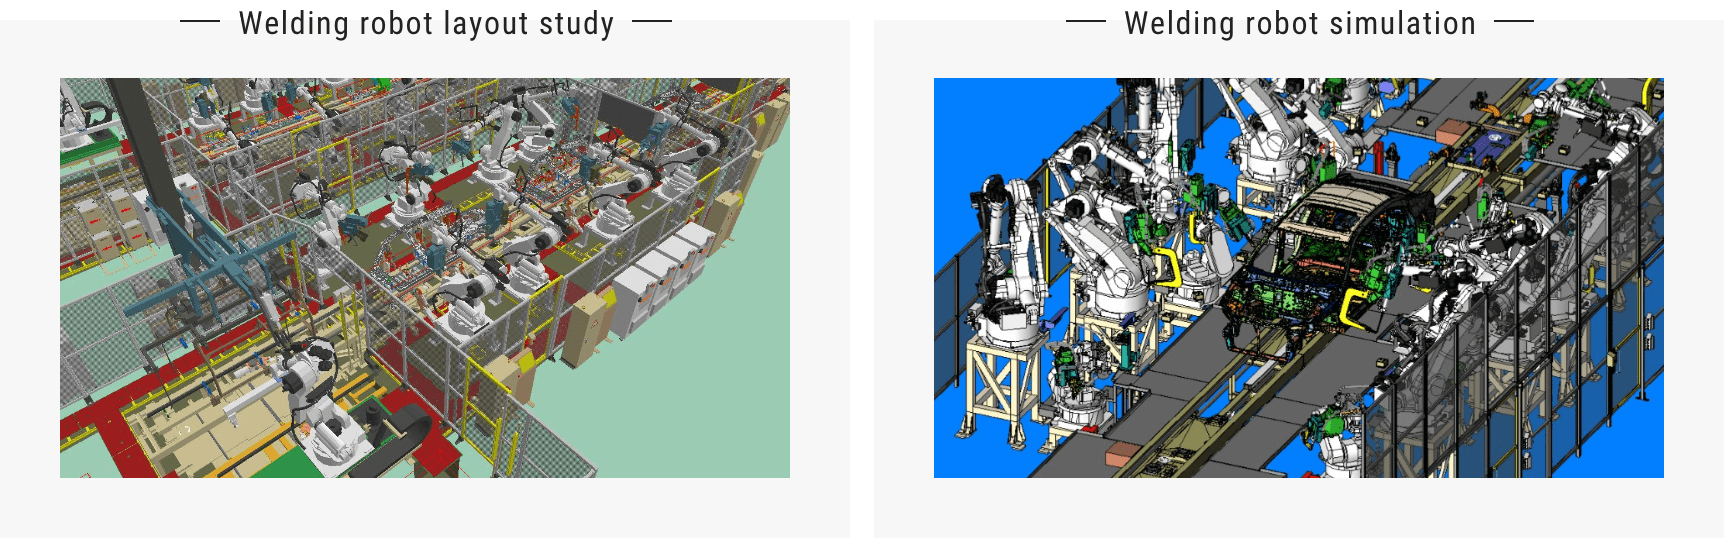 Welding robot layout study,Welding robot simulation